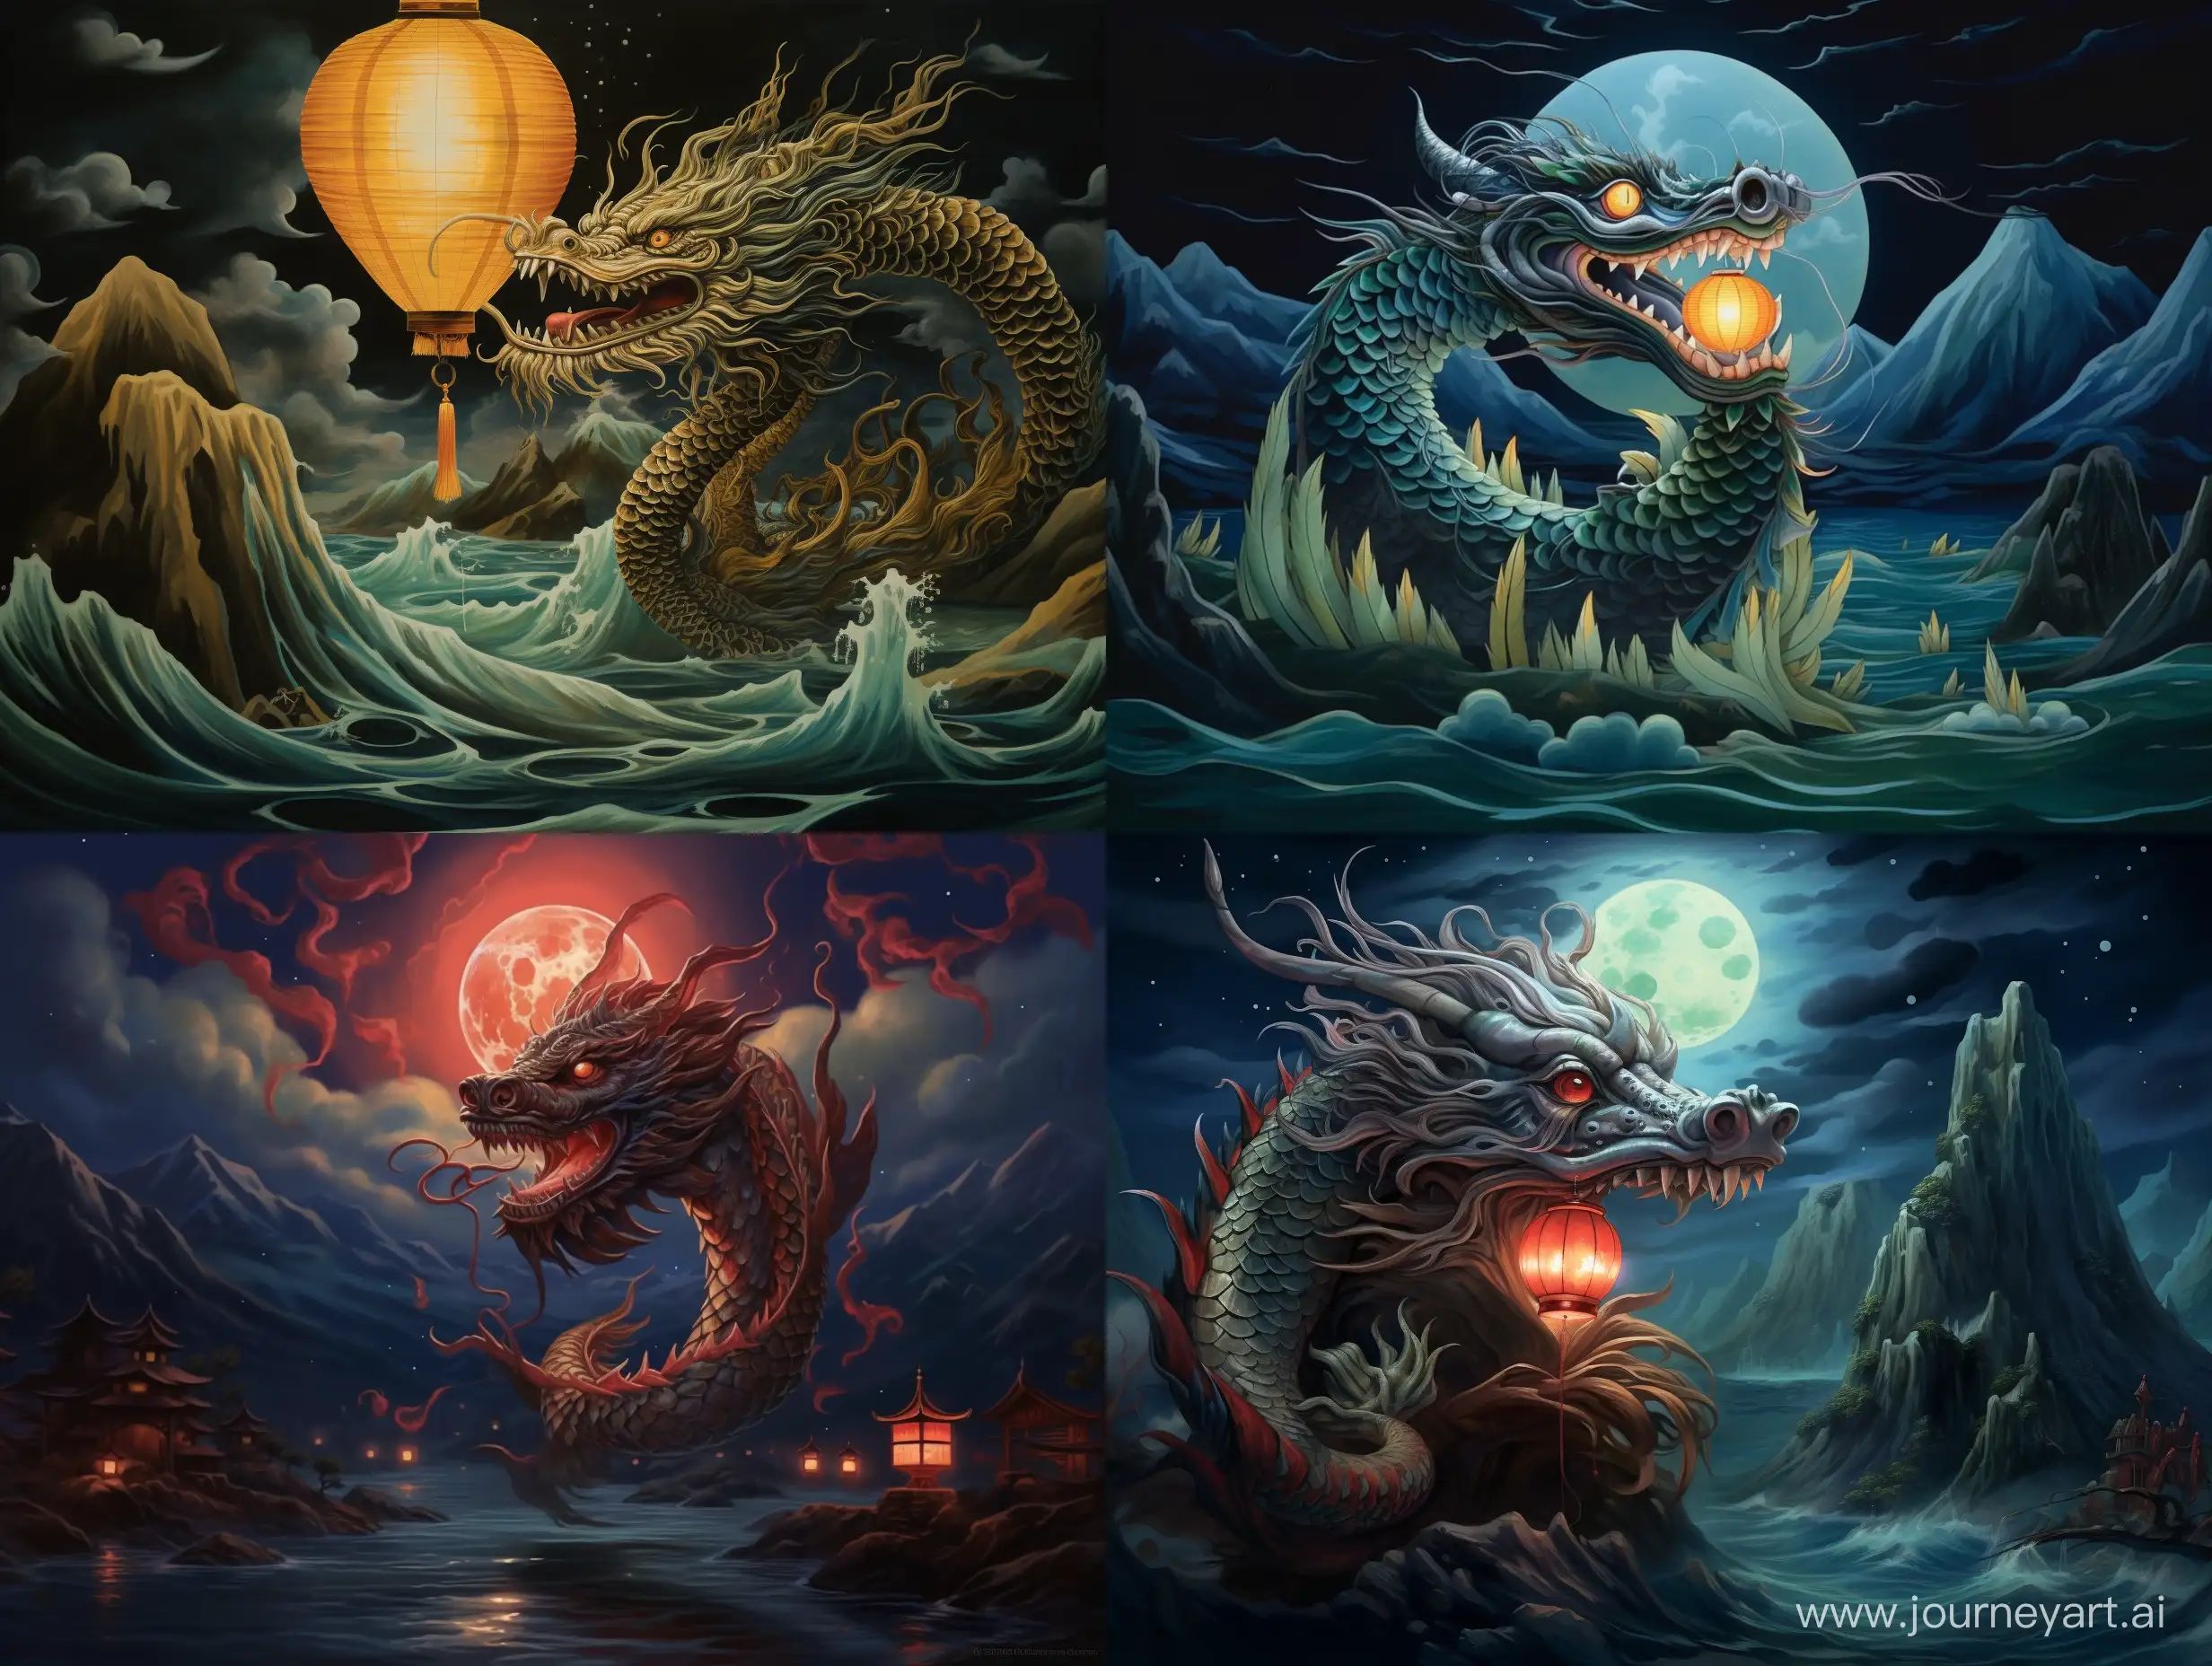 Dragon-Lantern-Transforming-into-Flying-Fish-in-Night-Mountains